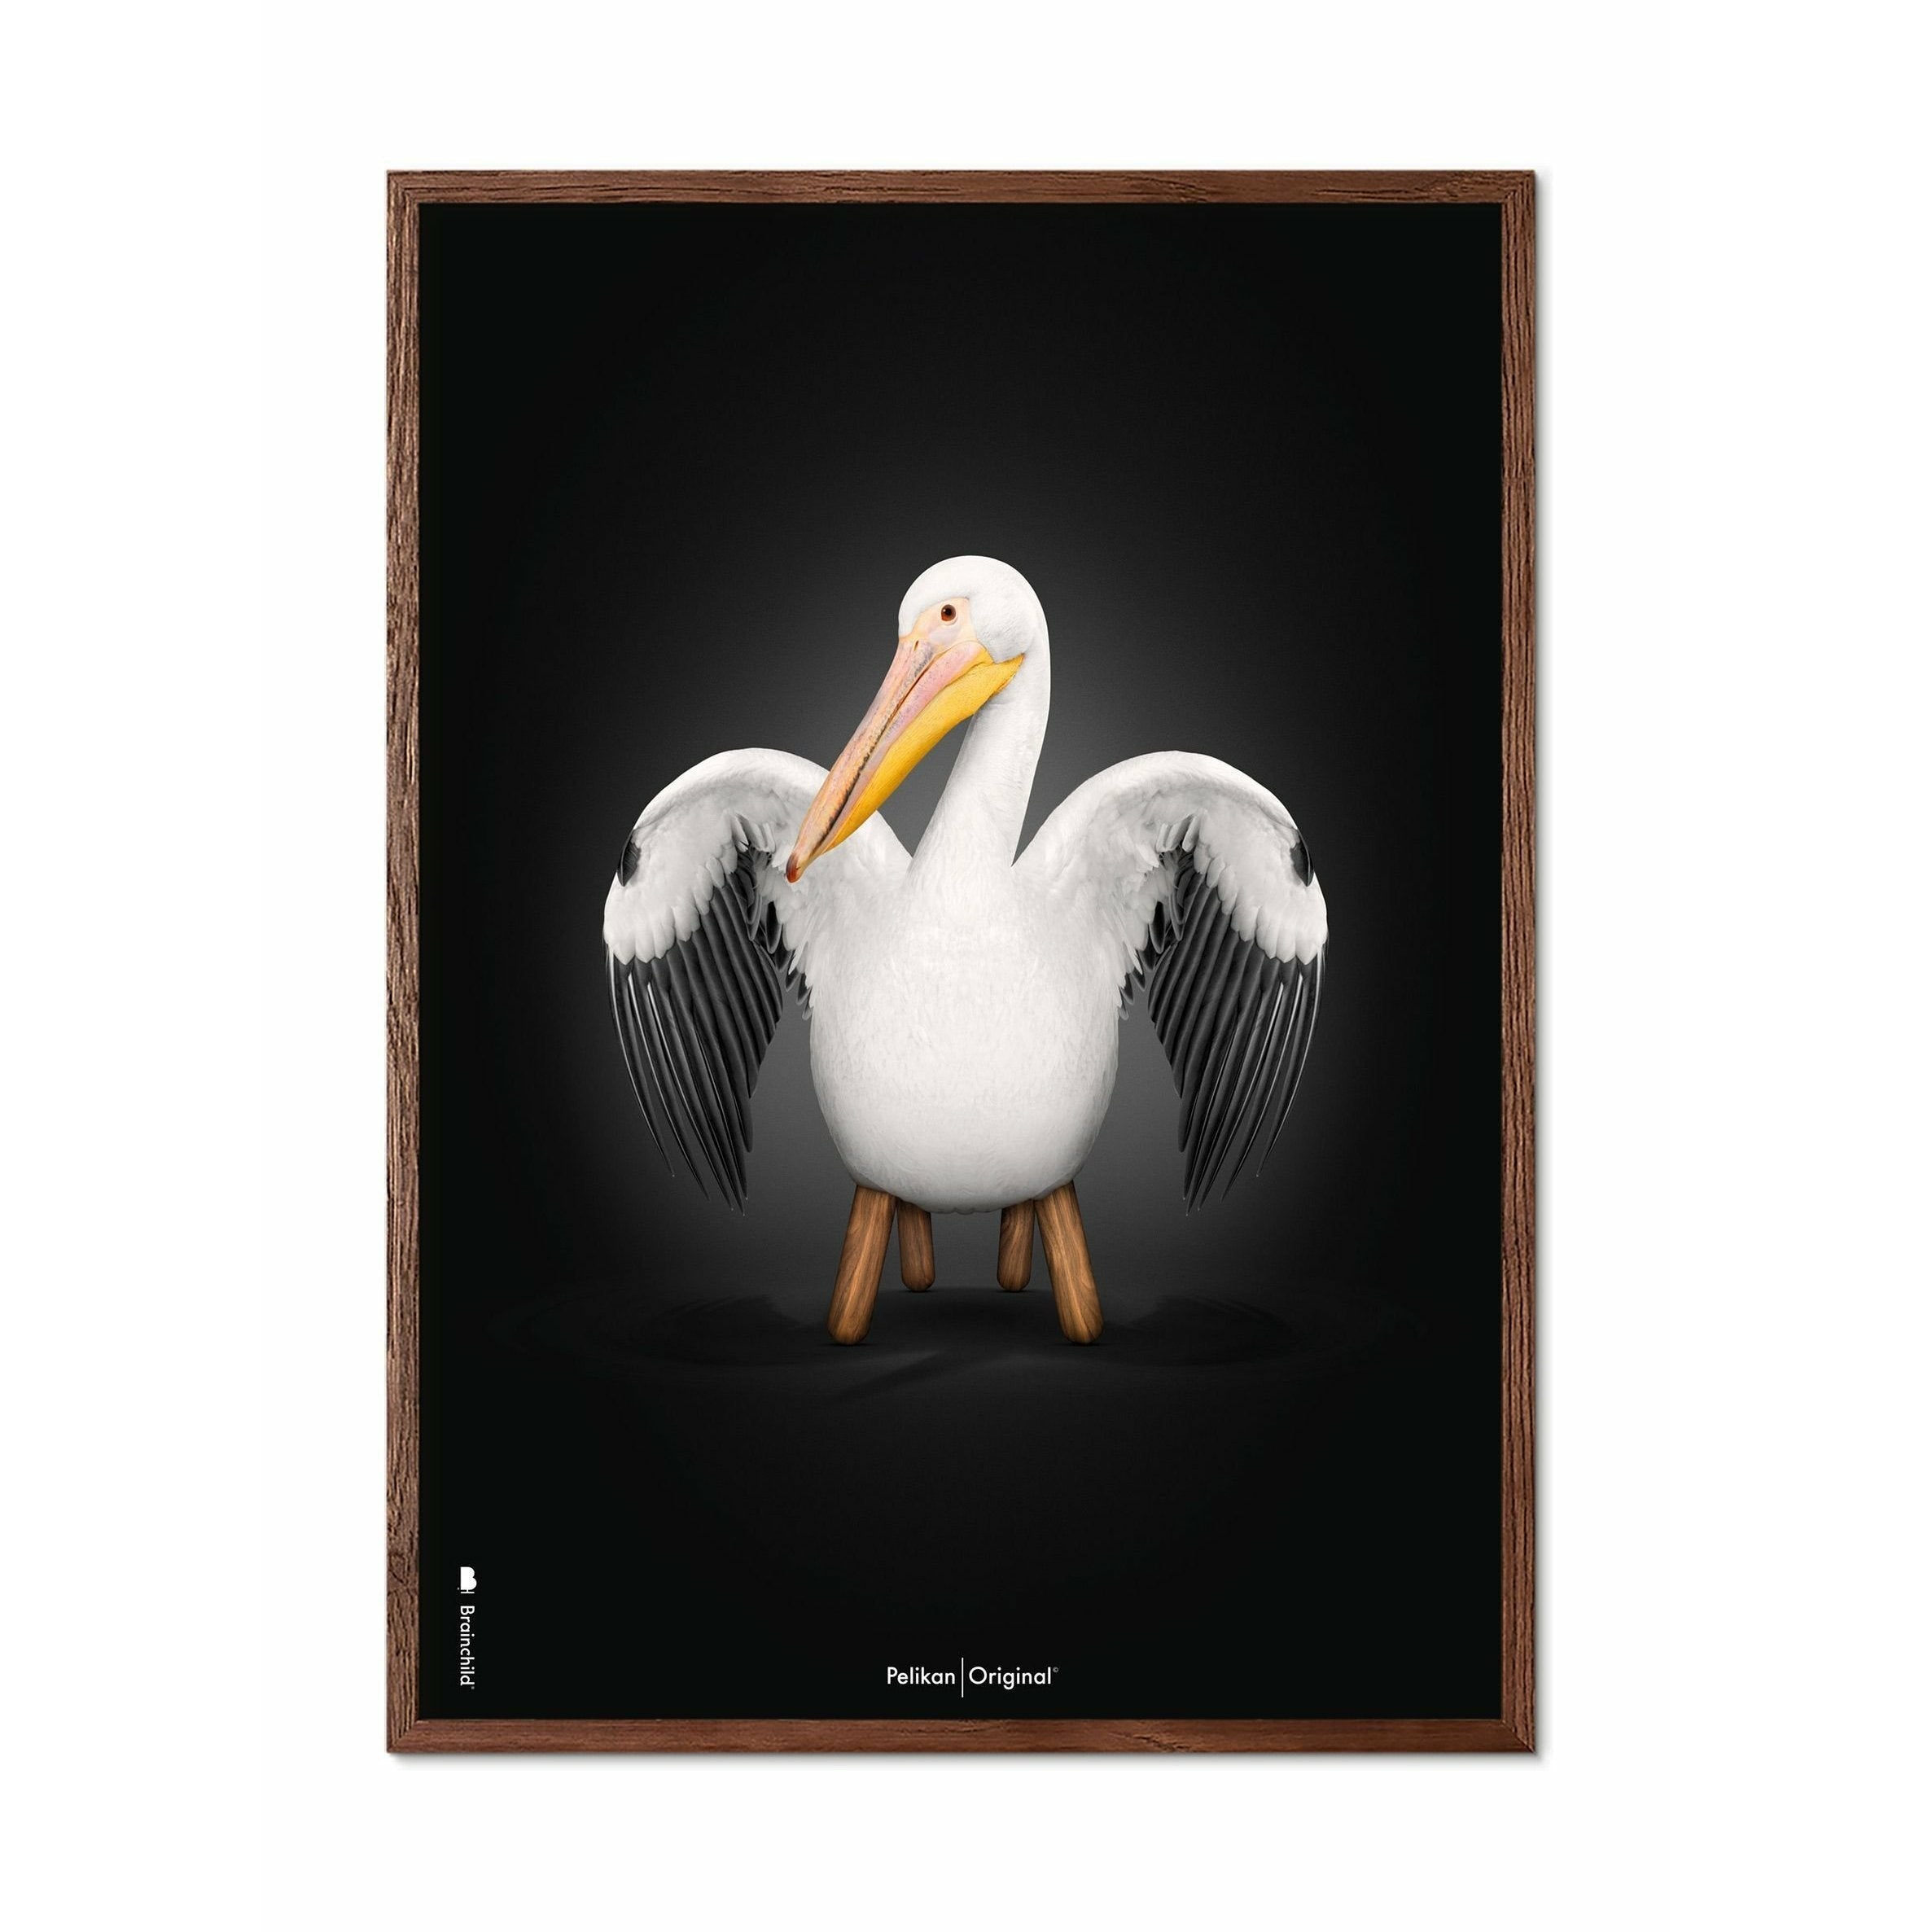 Brainchild Pelikan Classic Poster, Dark Wood Frame 30x40 Cm, Black Background